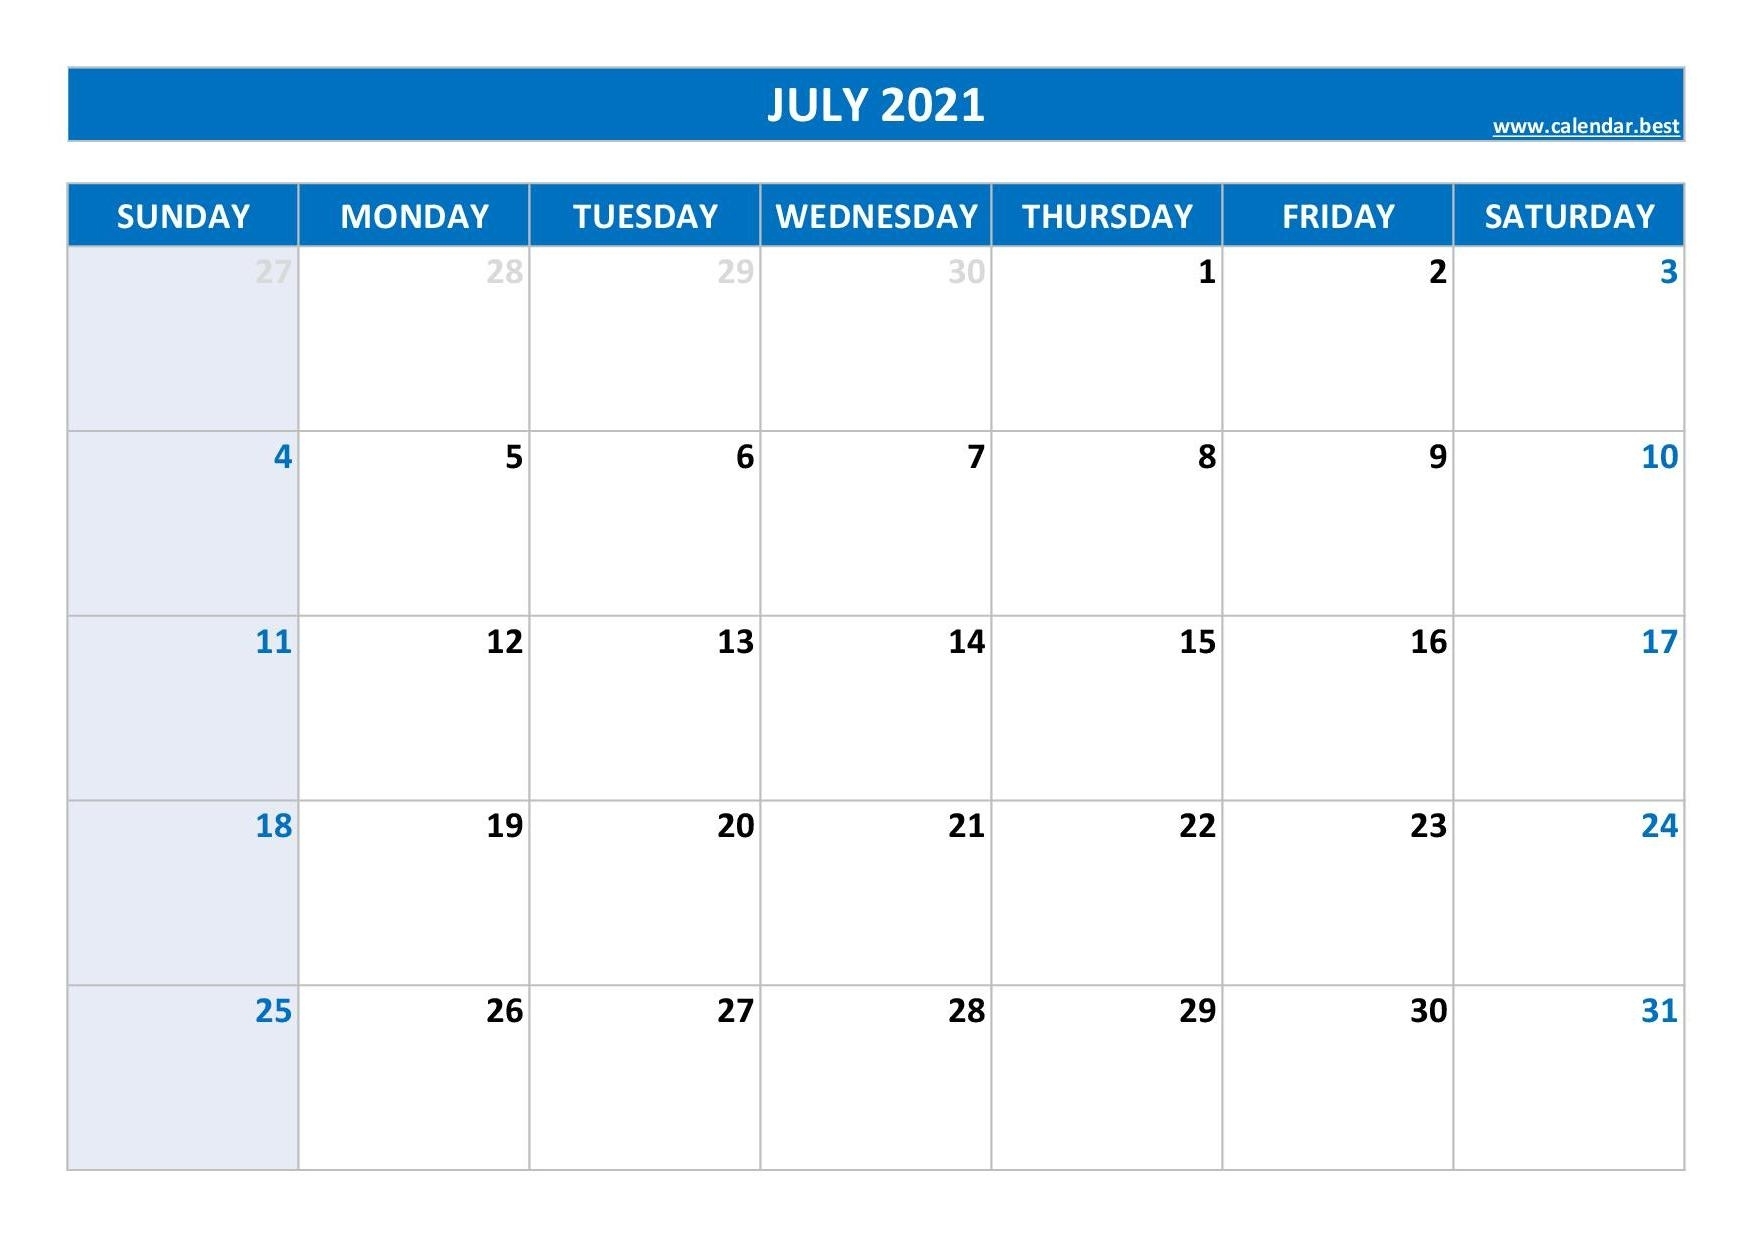 July 2021 Calendar -Calendar.best Editable July 2021 Calendar